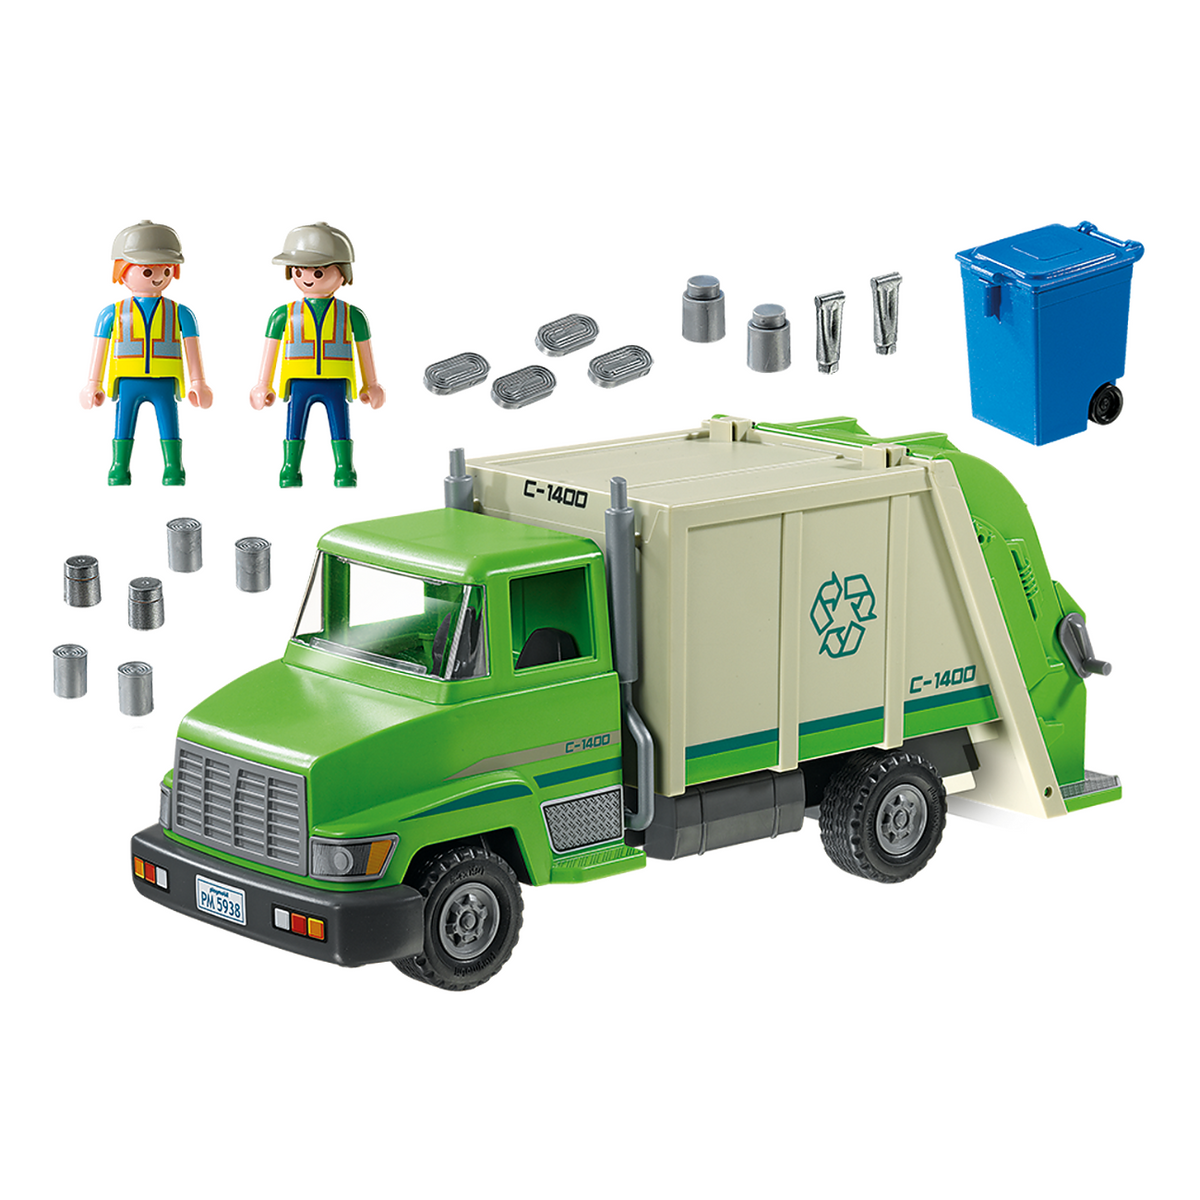 Playmobil Green Recycling Truck Child's Play